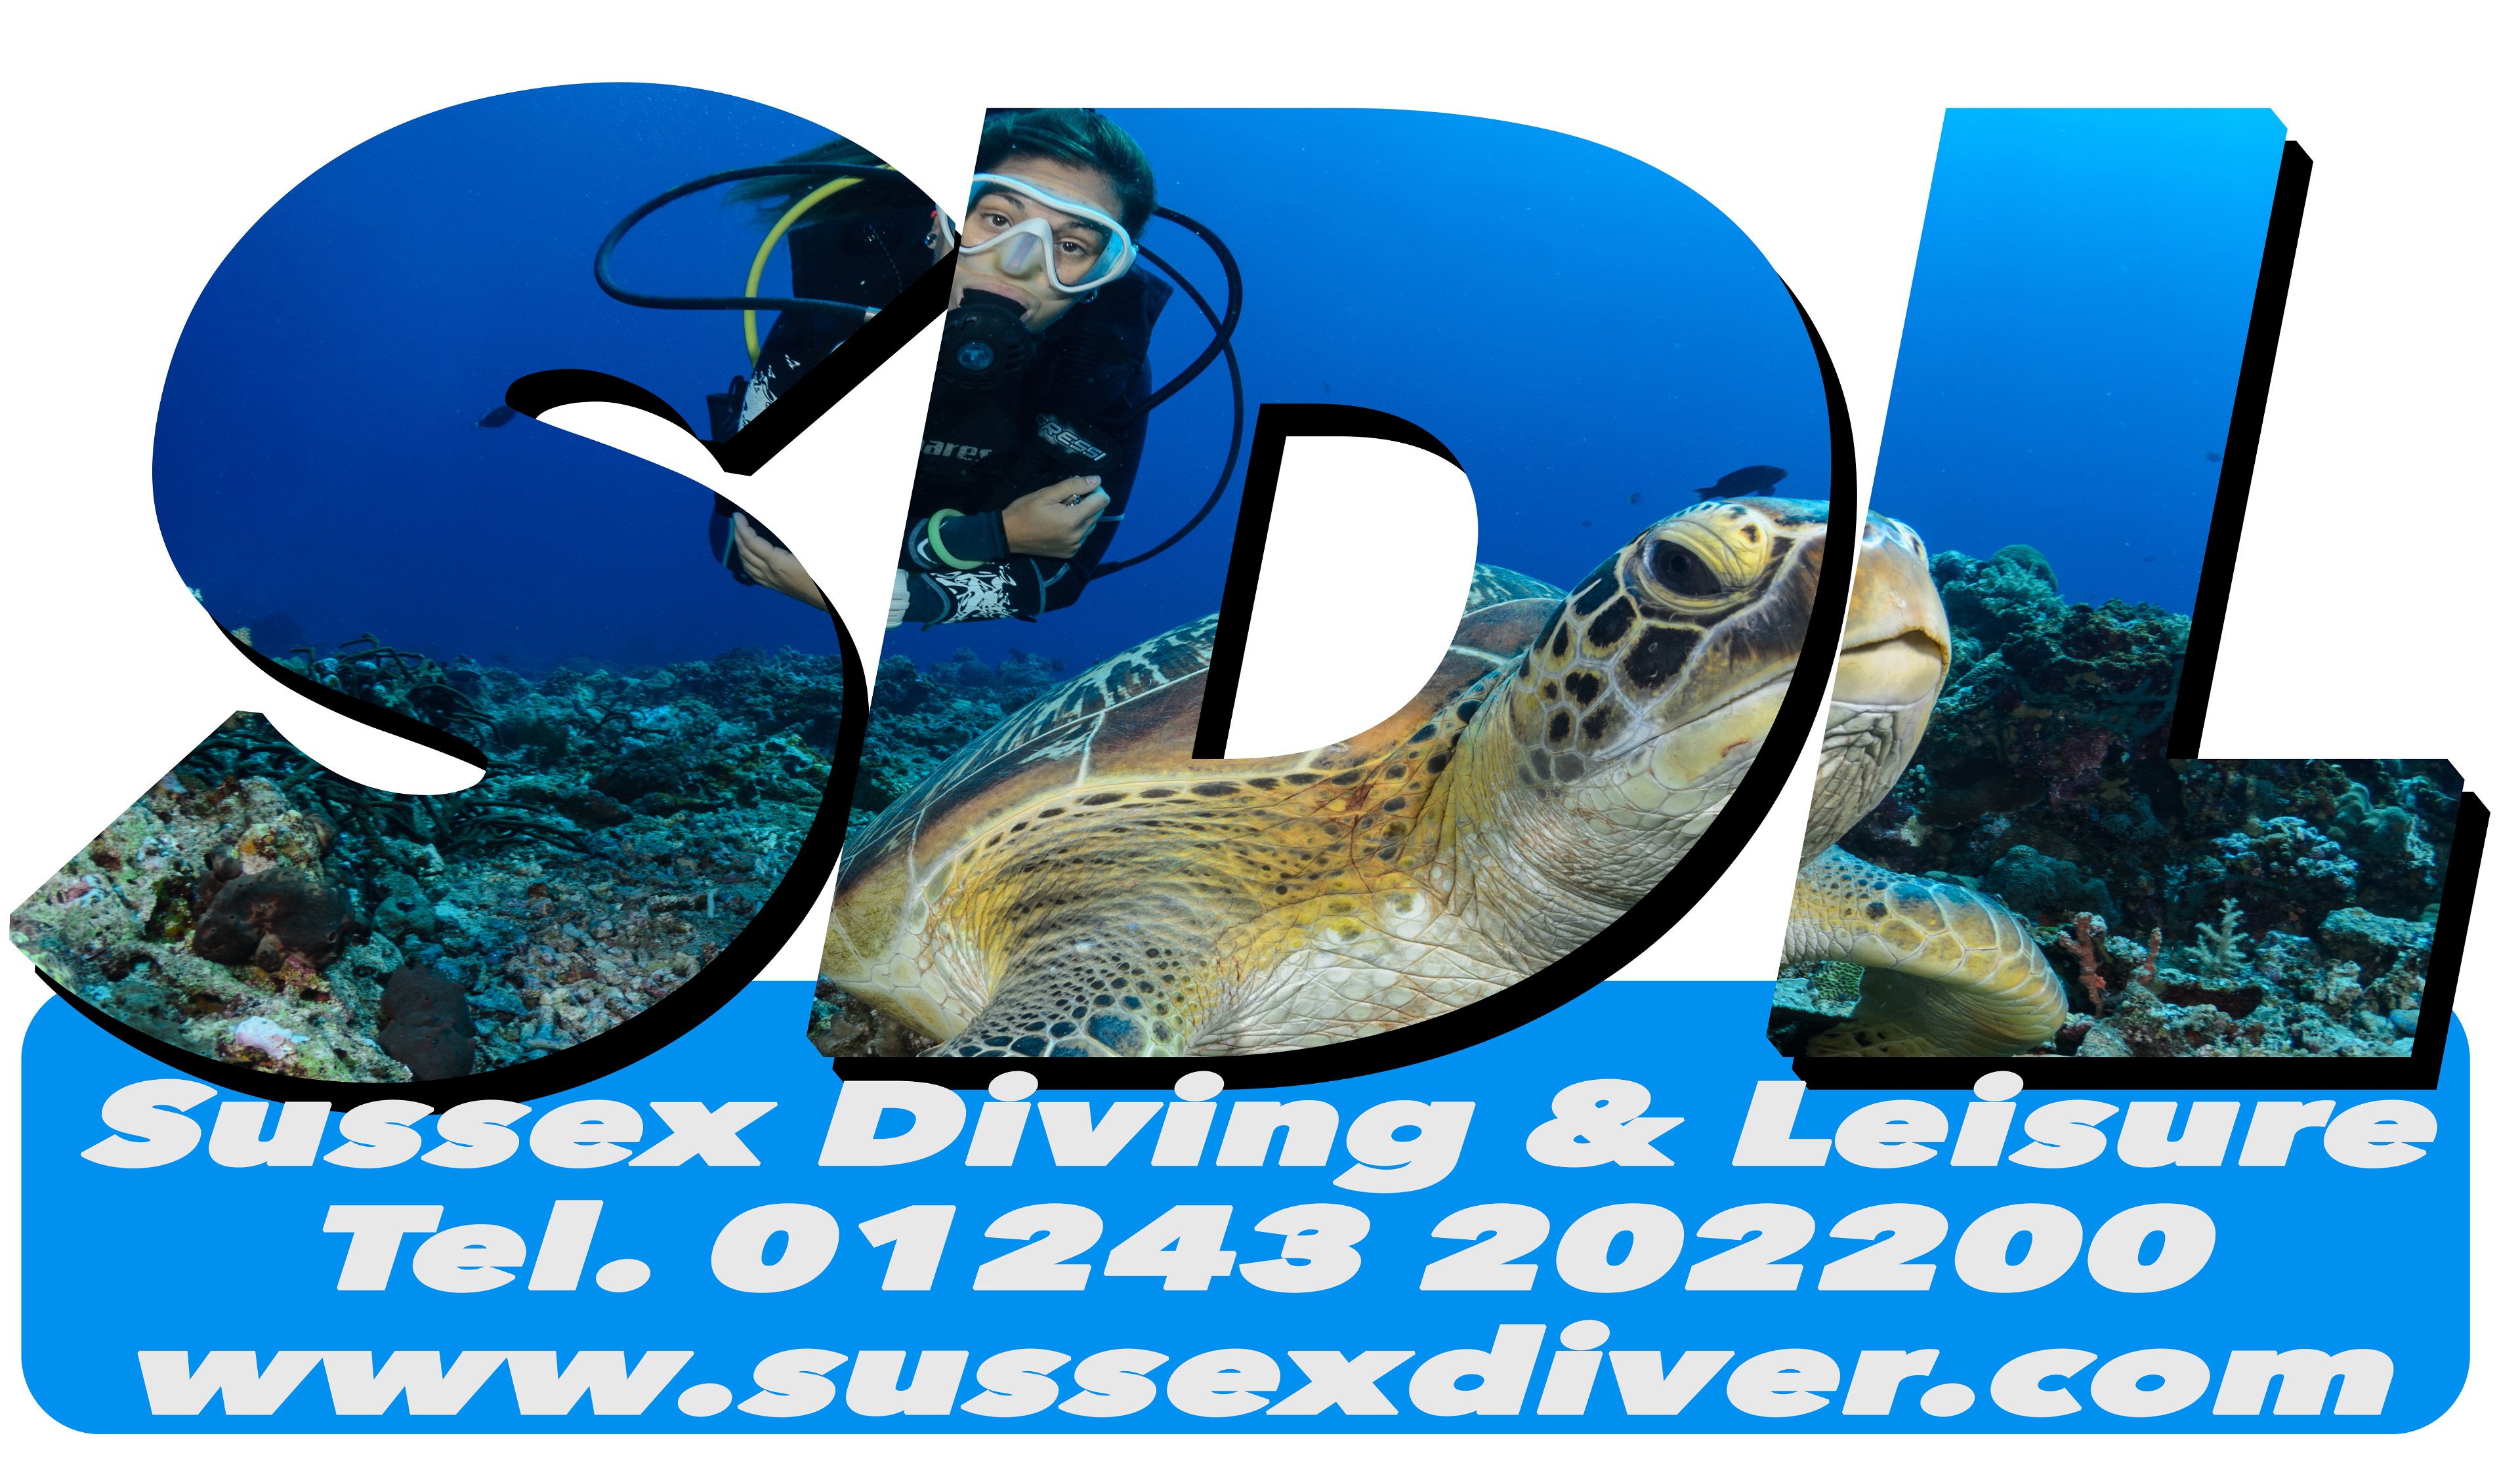 Sussex Diving & Leisure